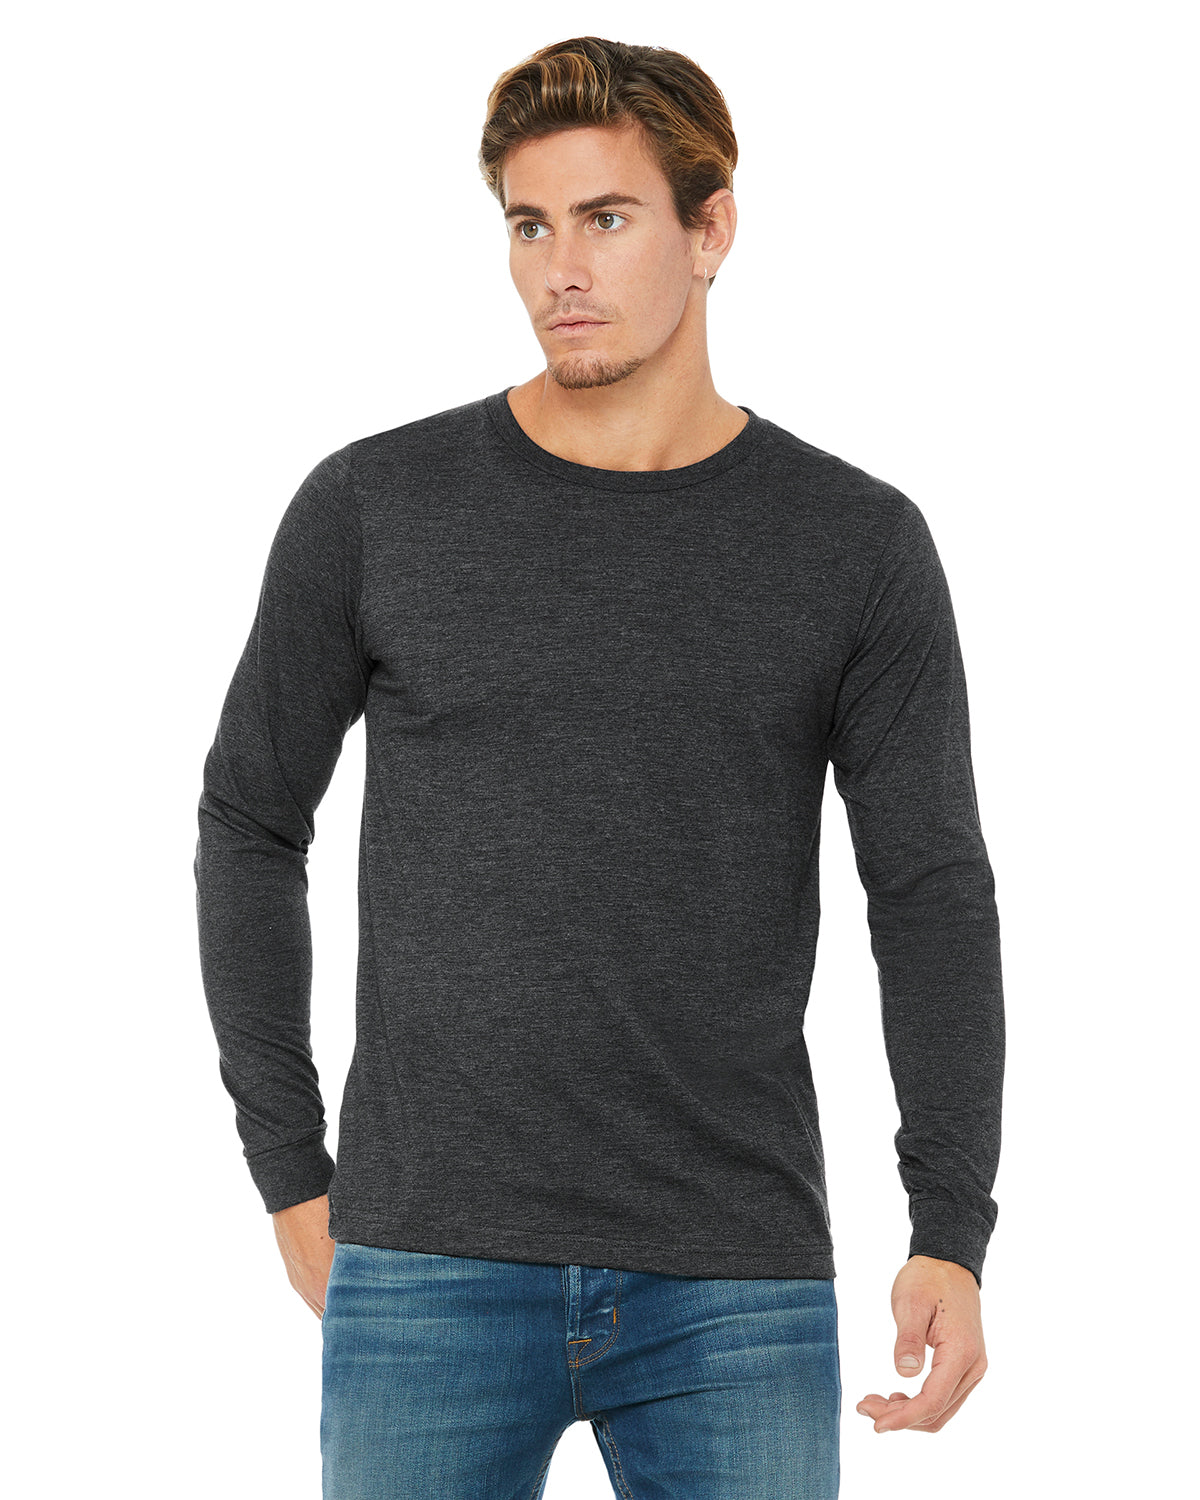 WB221 Unisex Premium Long Sleeve T-Shirt Design by Wyatt